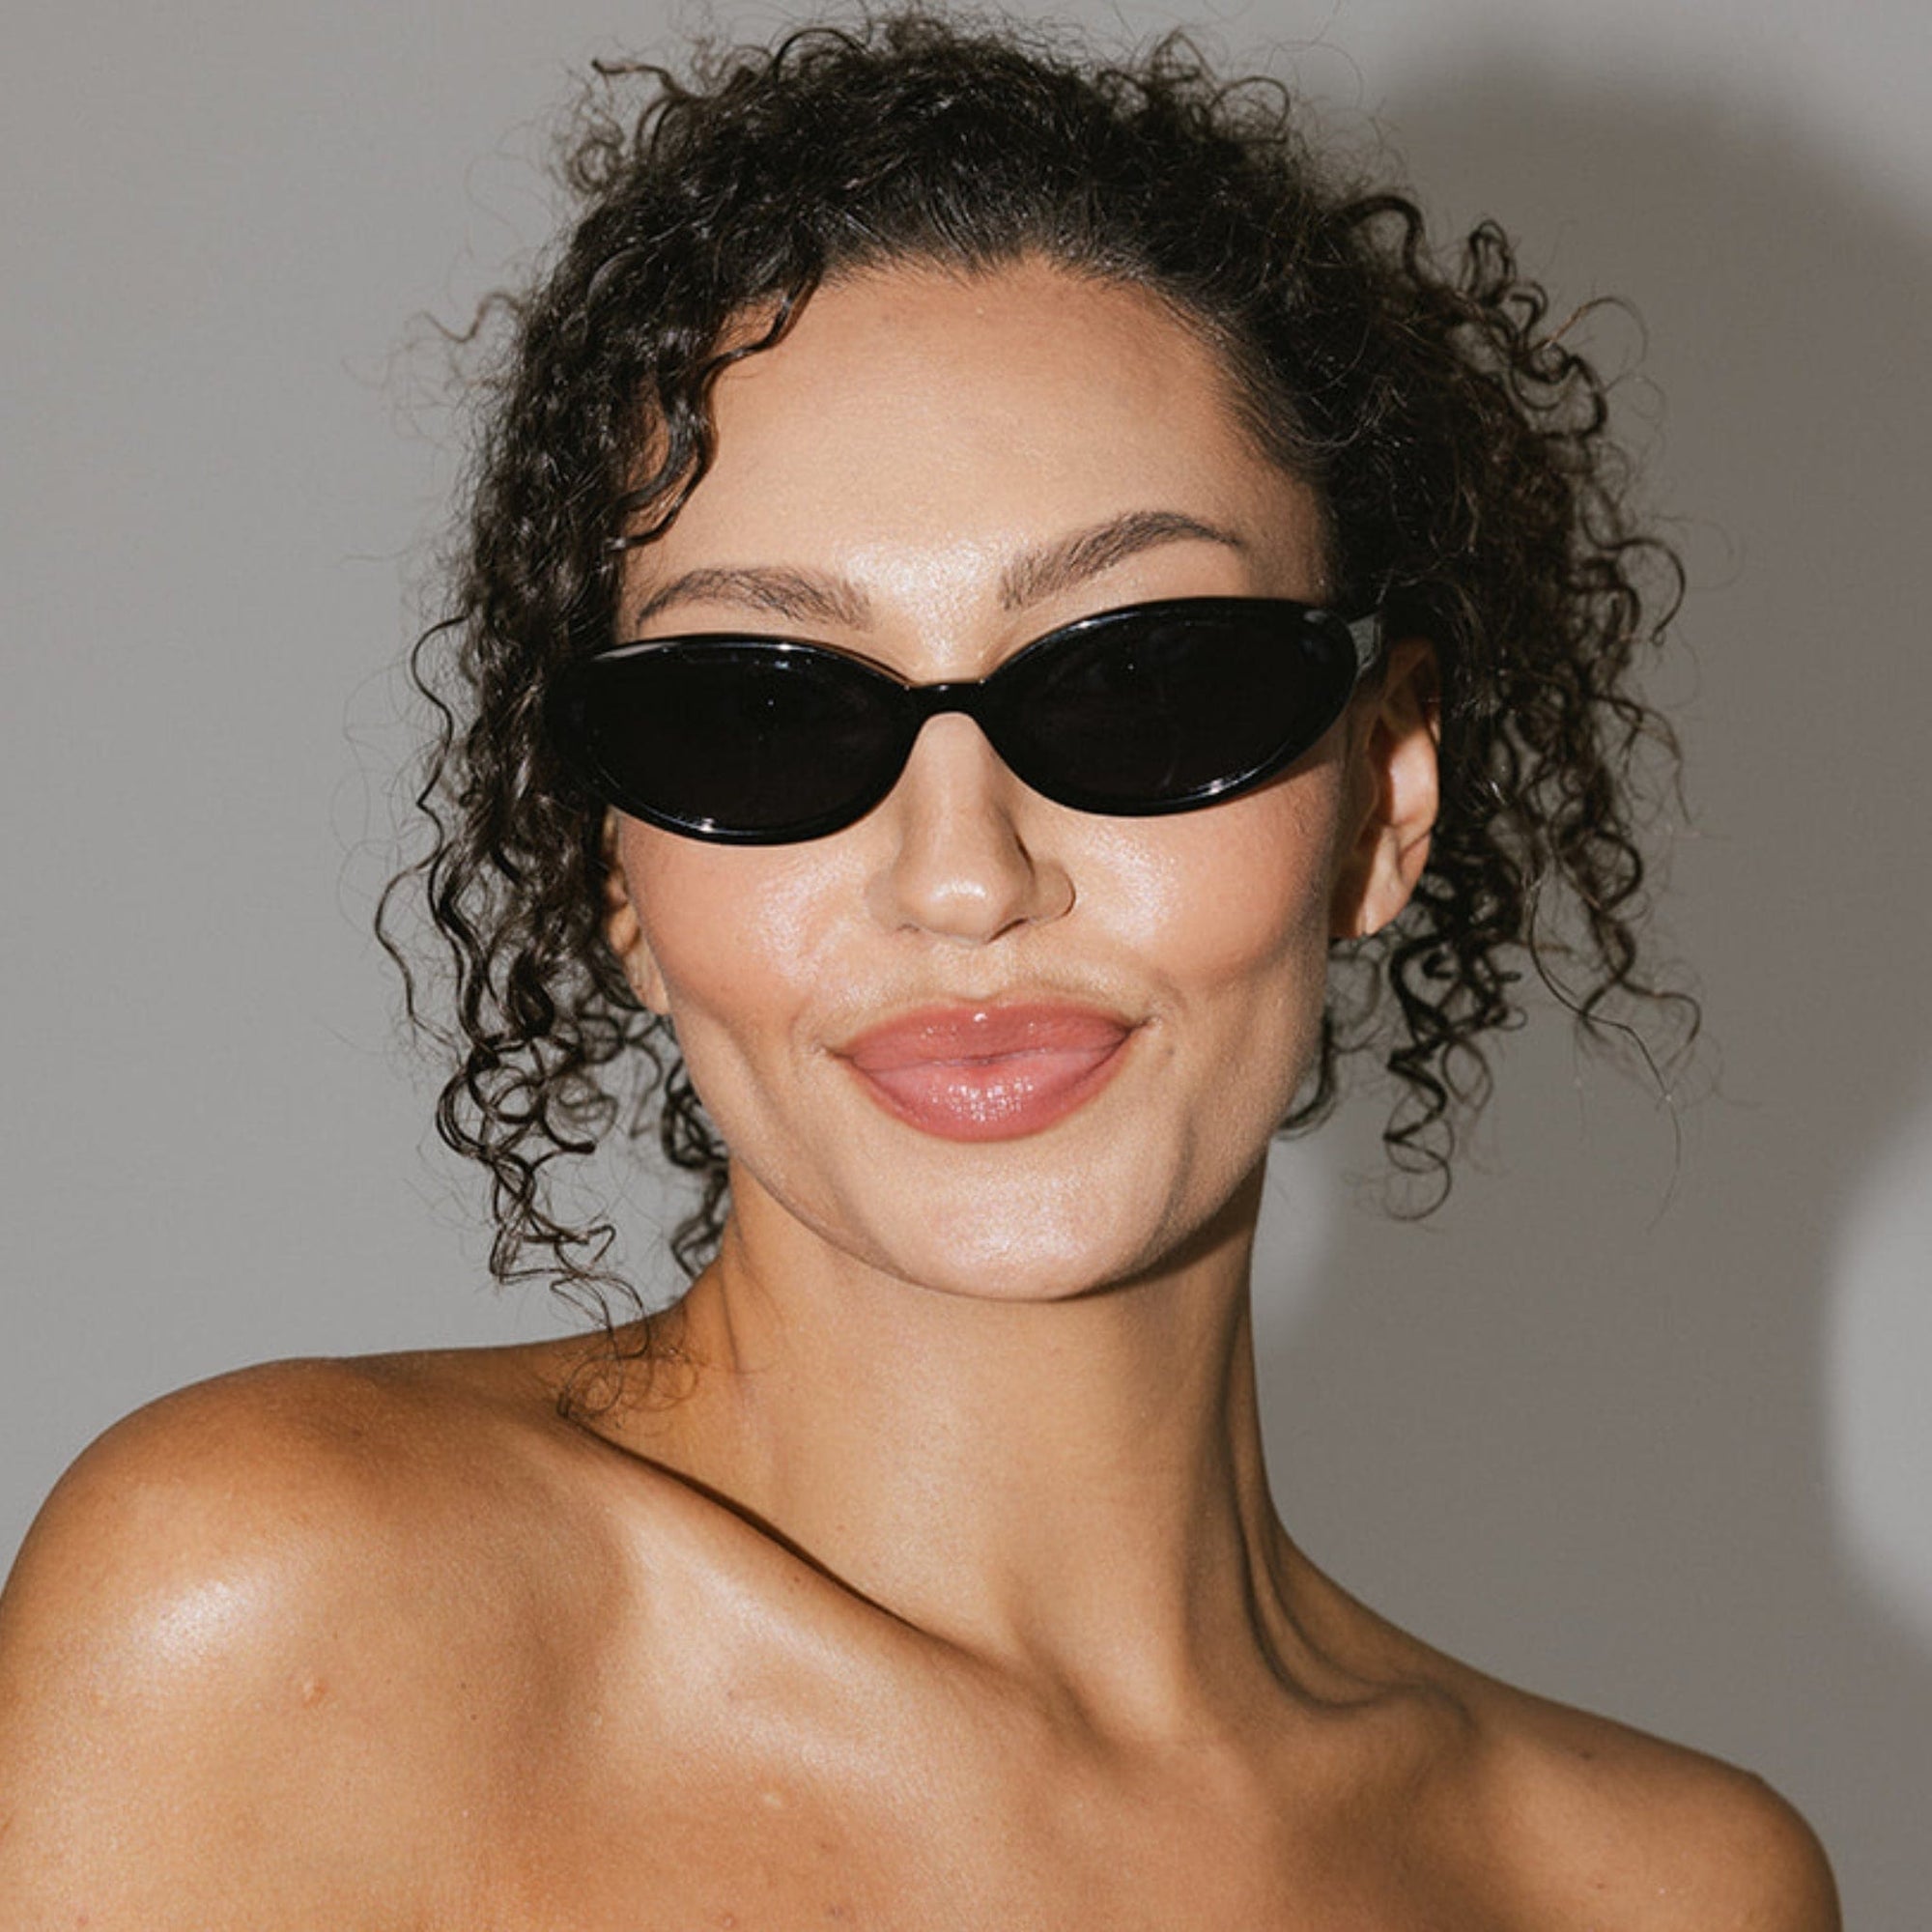 Gigi Pip sunglasses for women - Dionne Oval Sunglasses - trendy oval style women's sunglasses with acetate frames with protective polarized lenses [black]